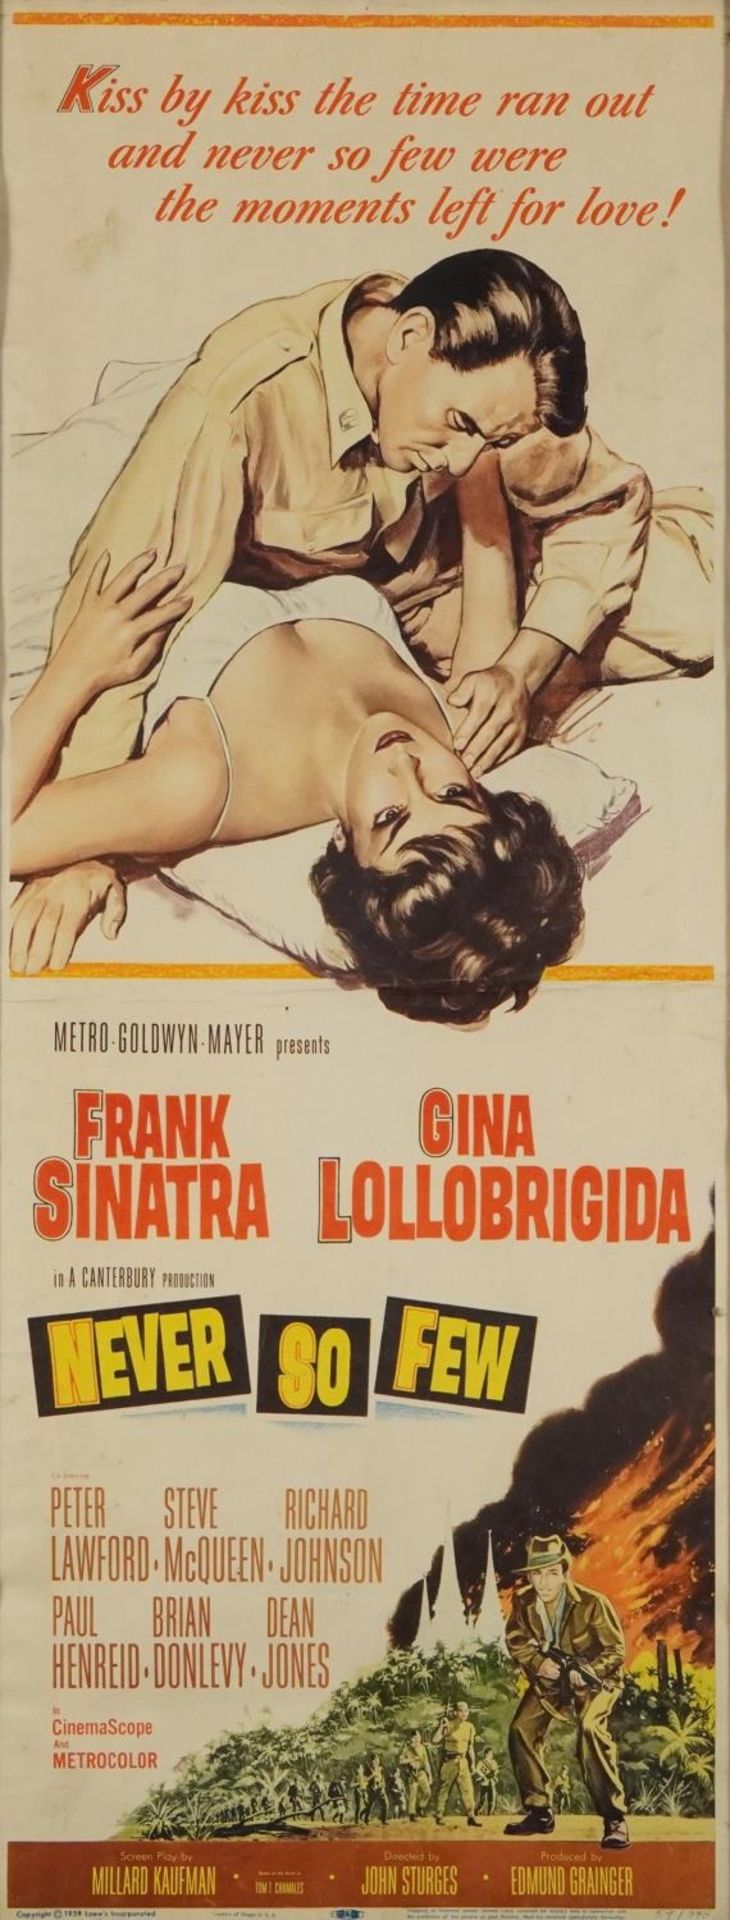 Frank Sinatra and Gina Lollobrigida Never So Few film poster, copyright 1959 Loews Incorporated,